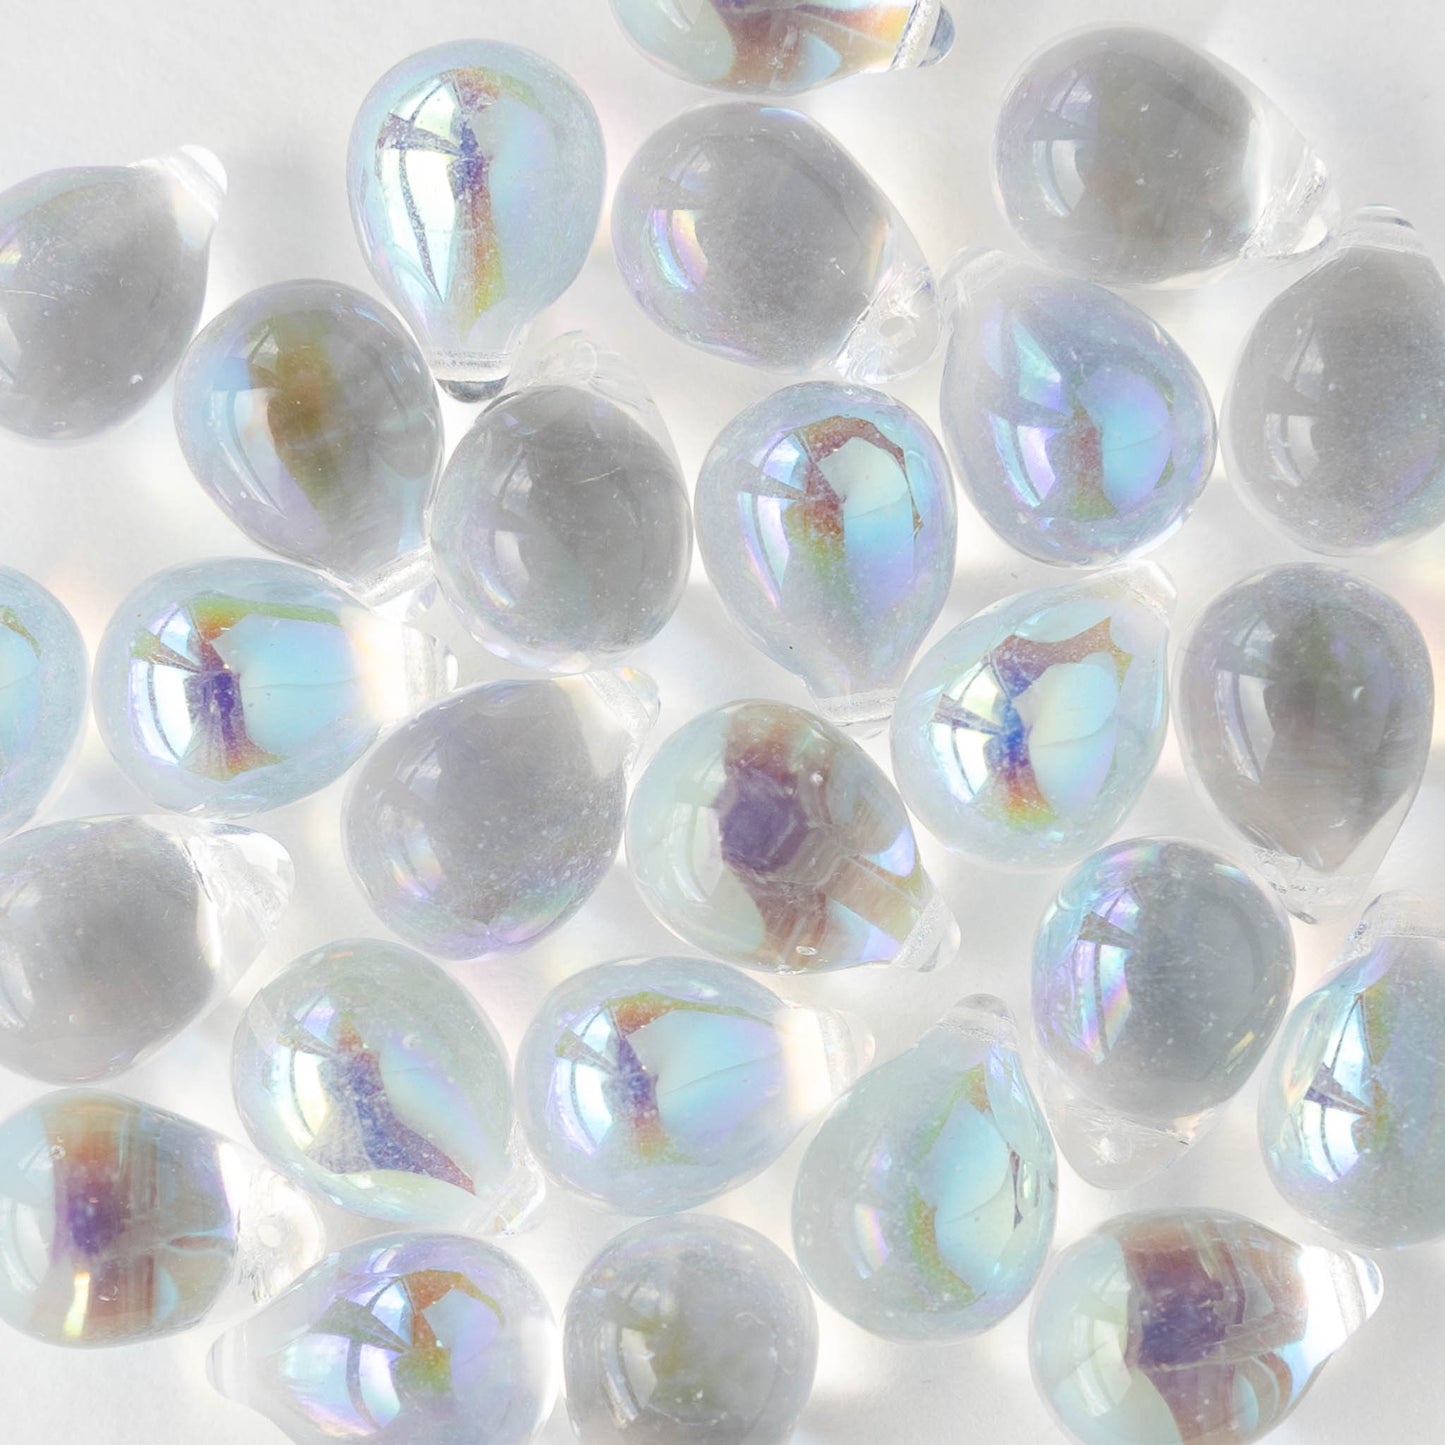 10x14mm Glass Teardrop Beads - Crystal AB